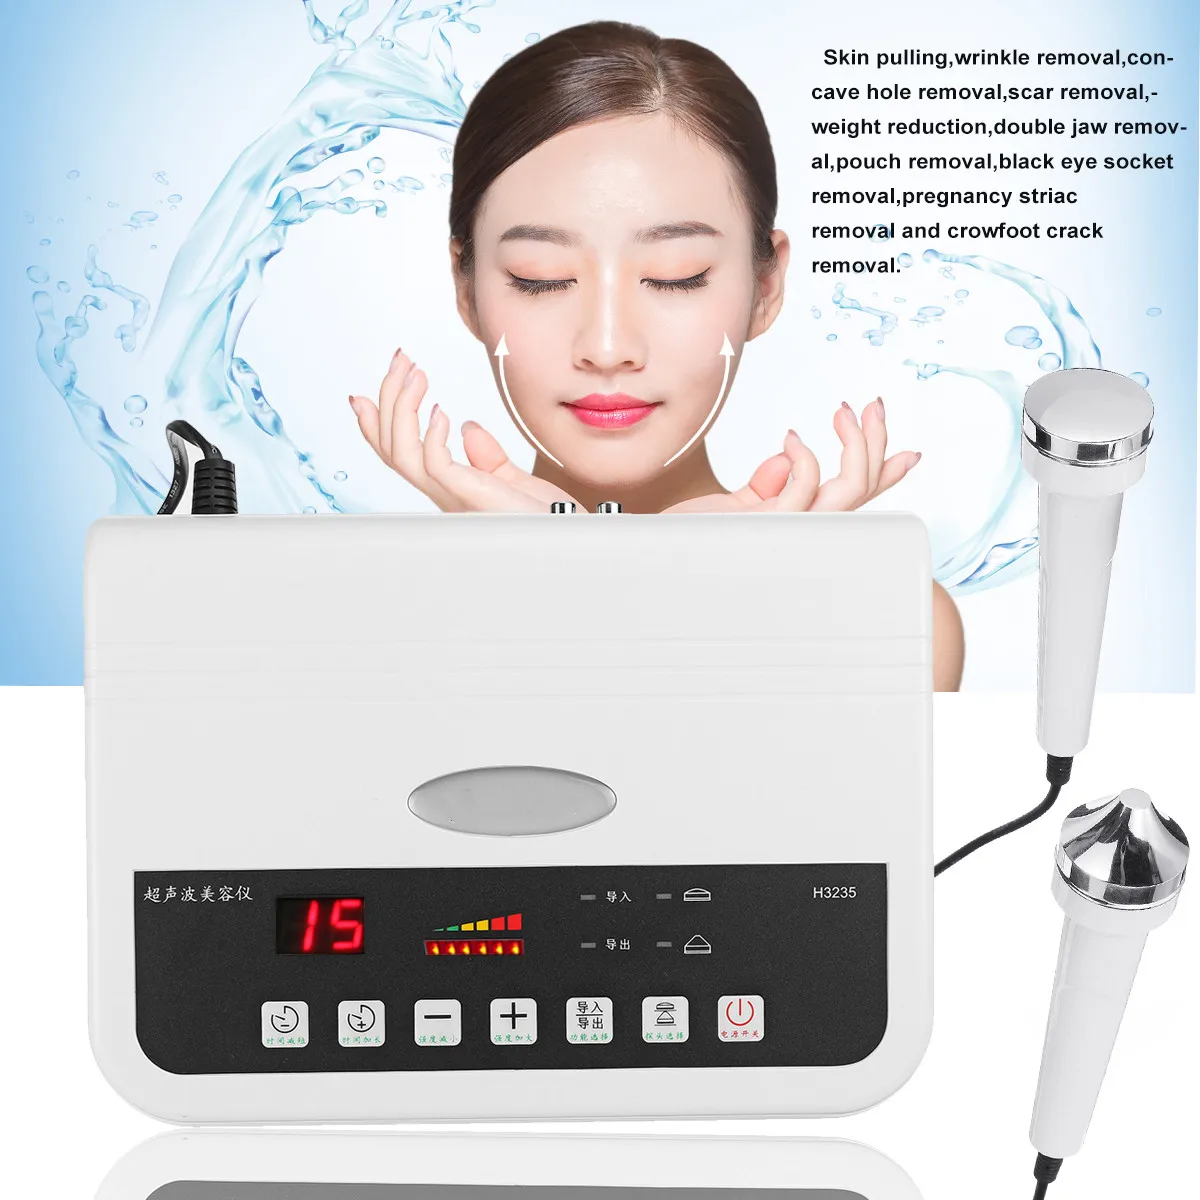 

Hifu Ultrasonic Beauty Machine Facial SPA Electric Vibration Facial Cleaner Whitening Improve Skin Freckle Wrinkle Beauty Salon